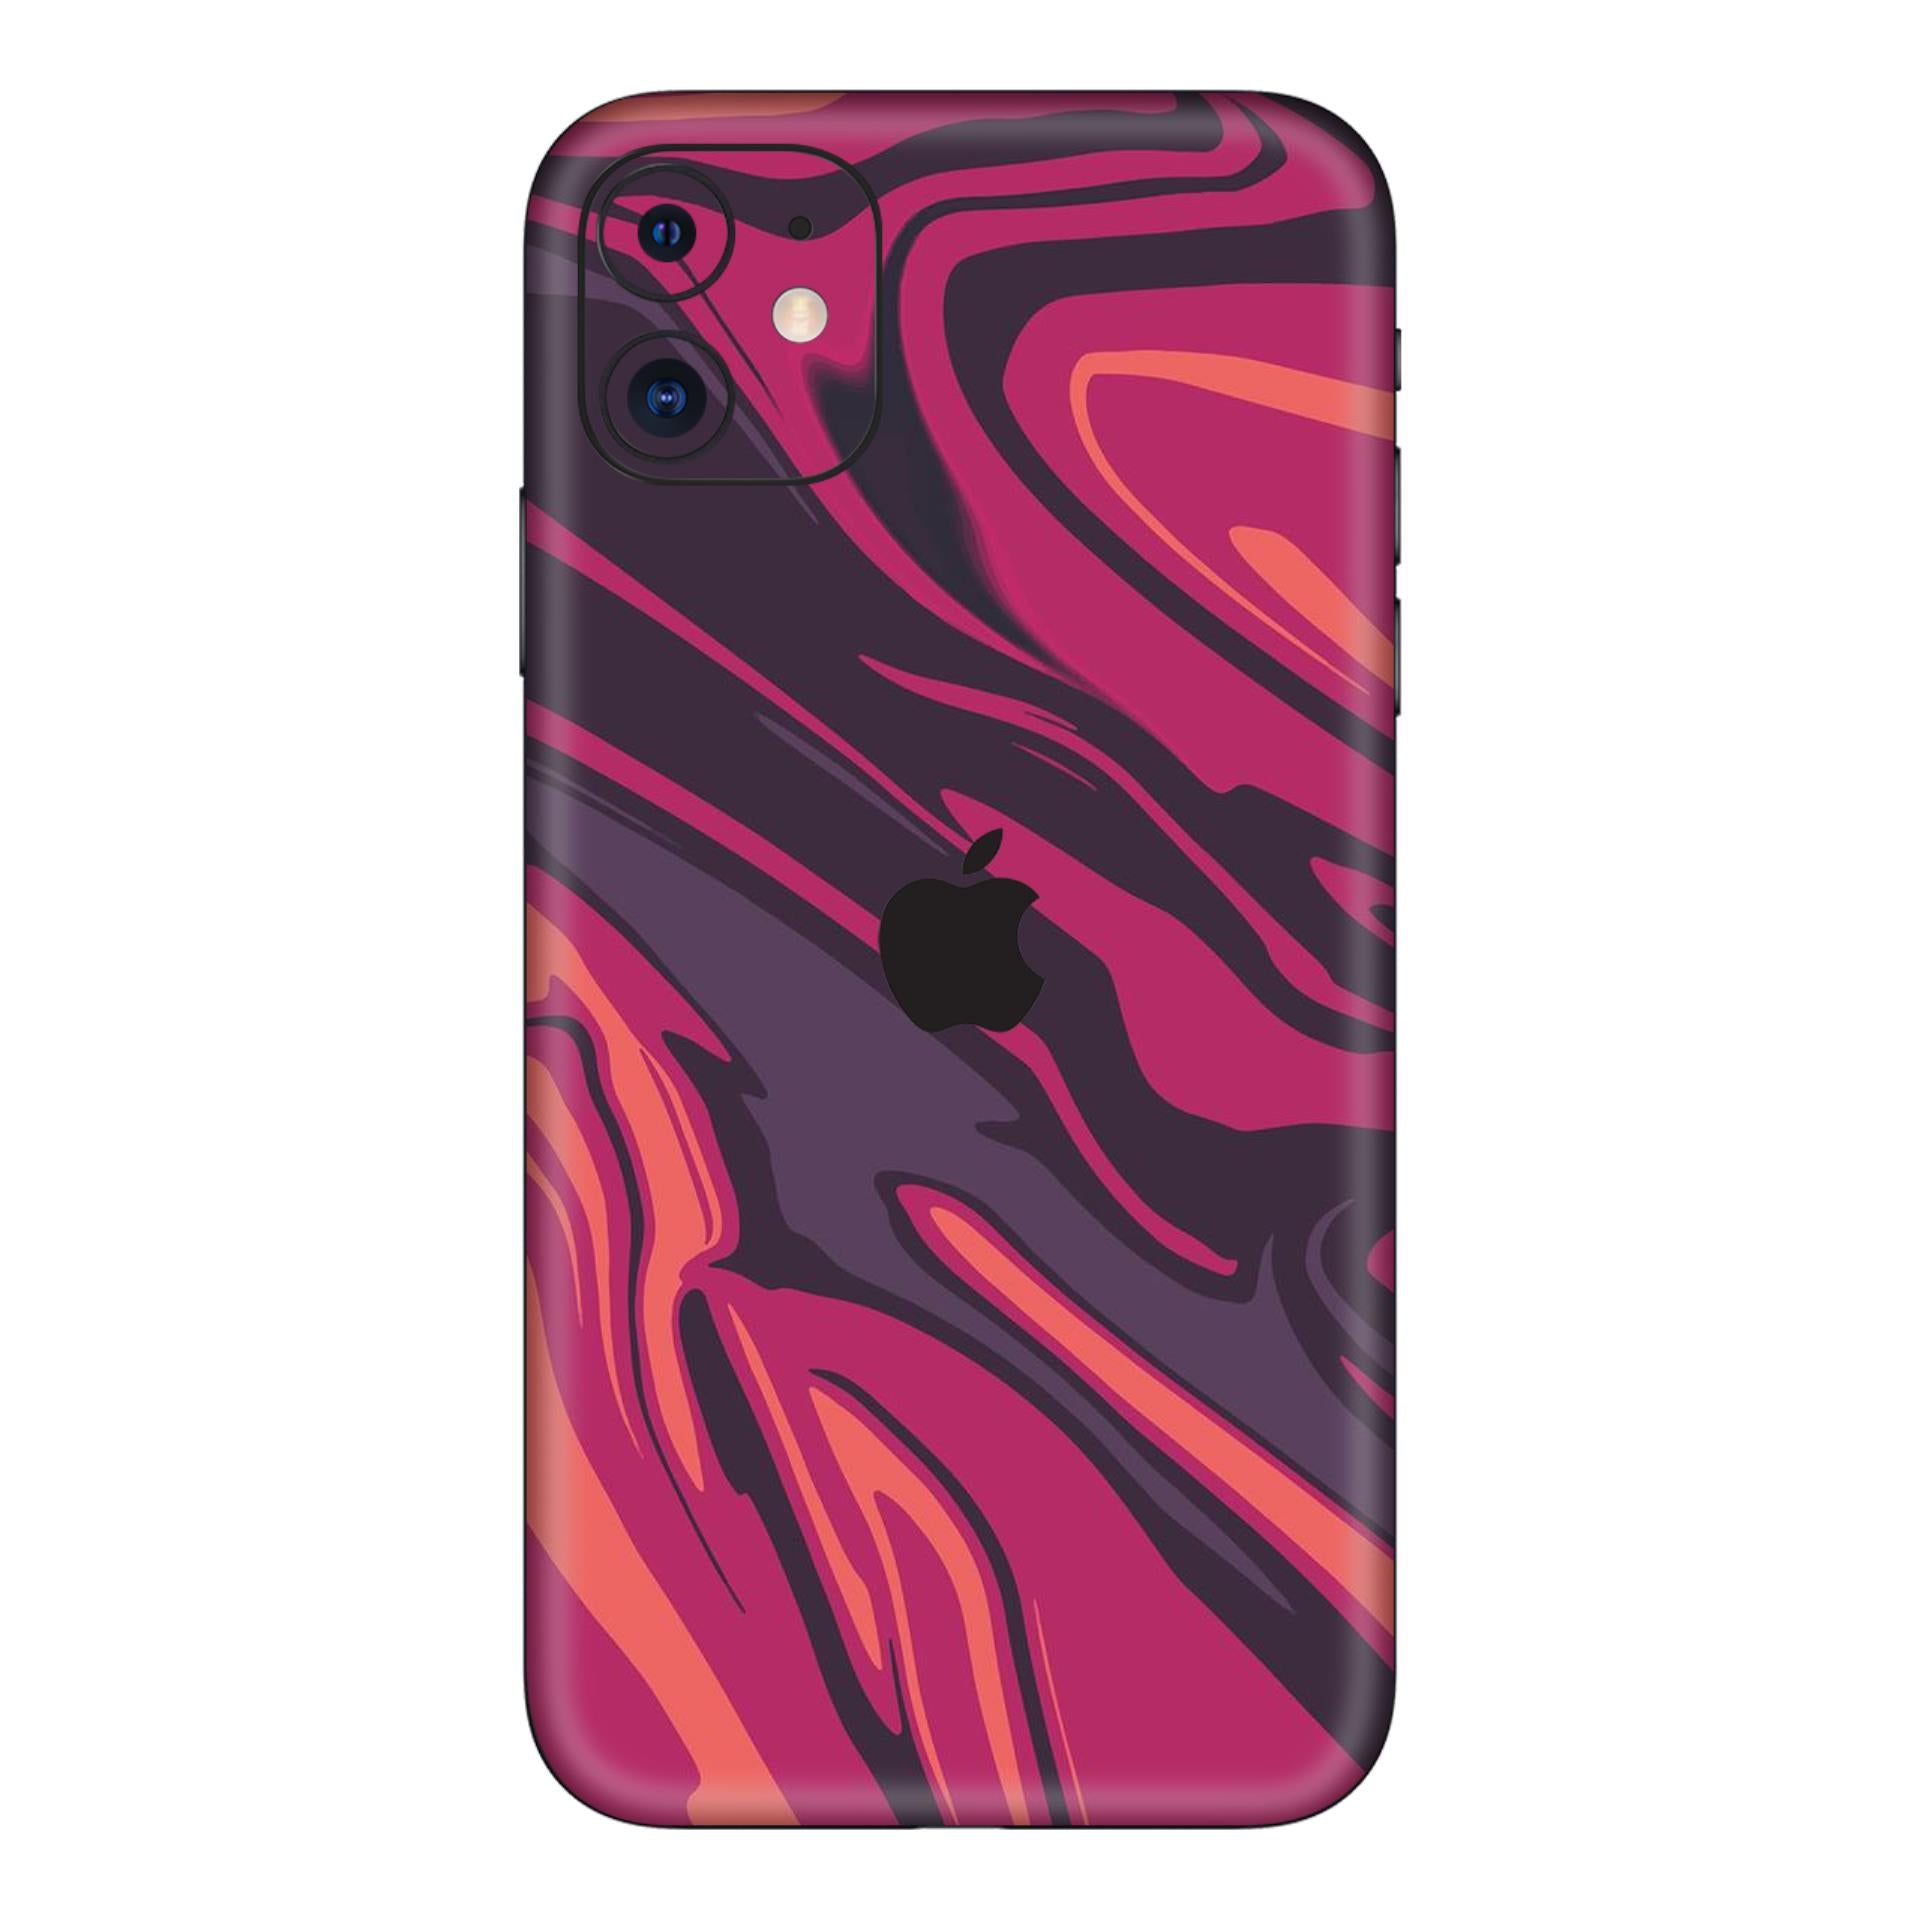 iPhone SE(2020) Skins & Wraps